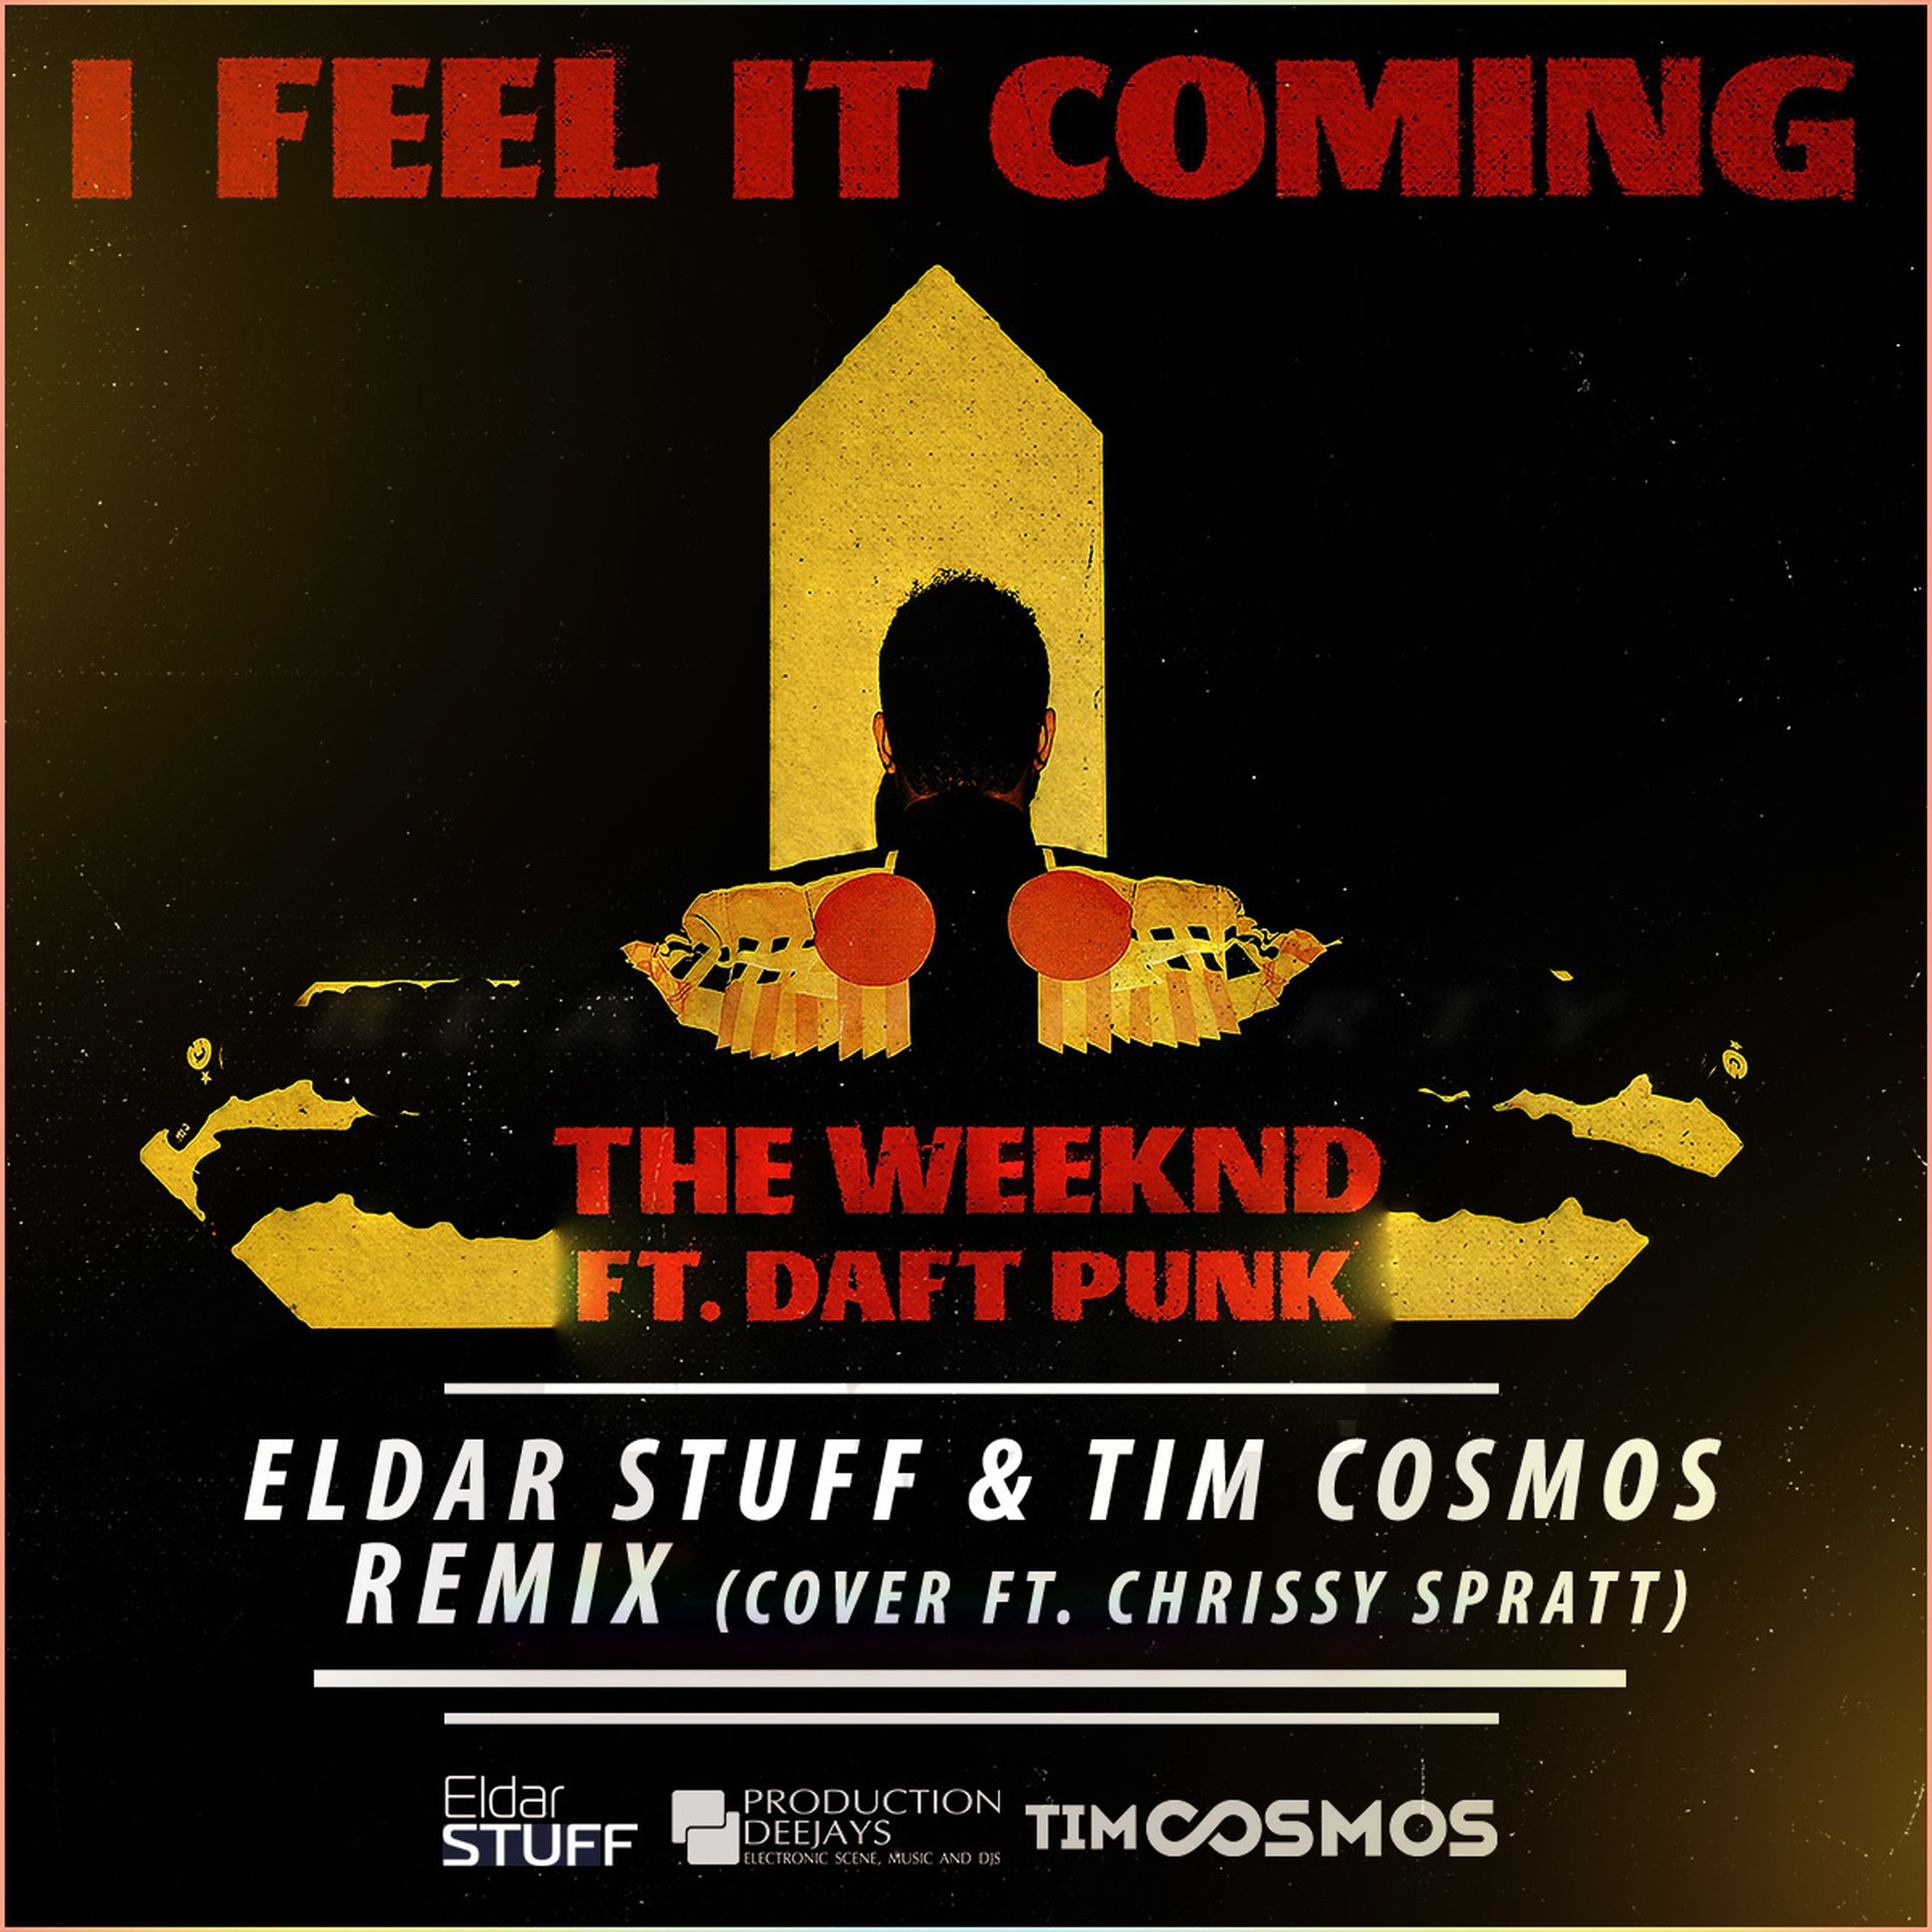 Feeling coming down. I feel it coming the Weeknd. The Weeknd Daft Punk i feel it coming. The weekend i feel it coming. The weekend i feel it coming обложка.